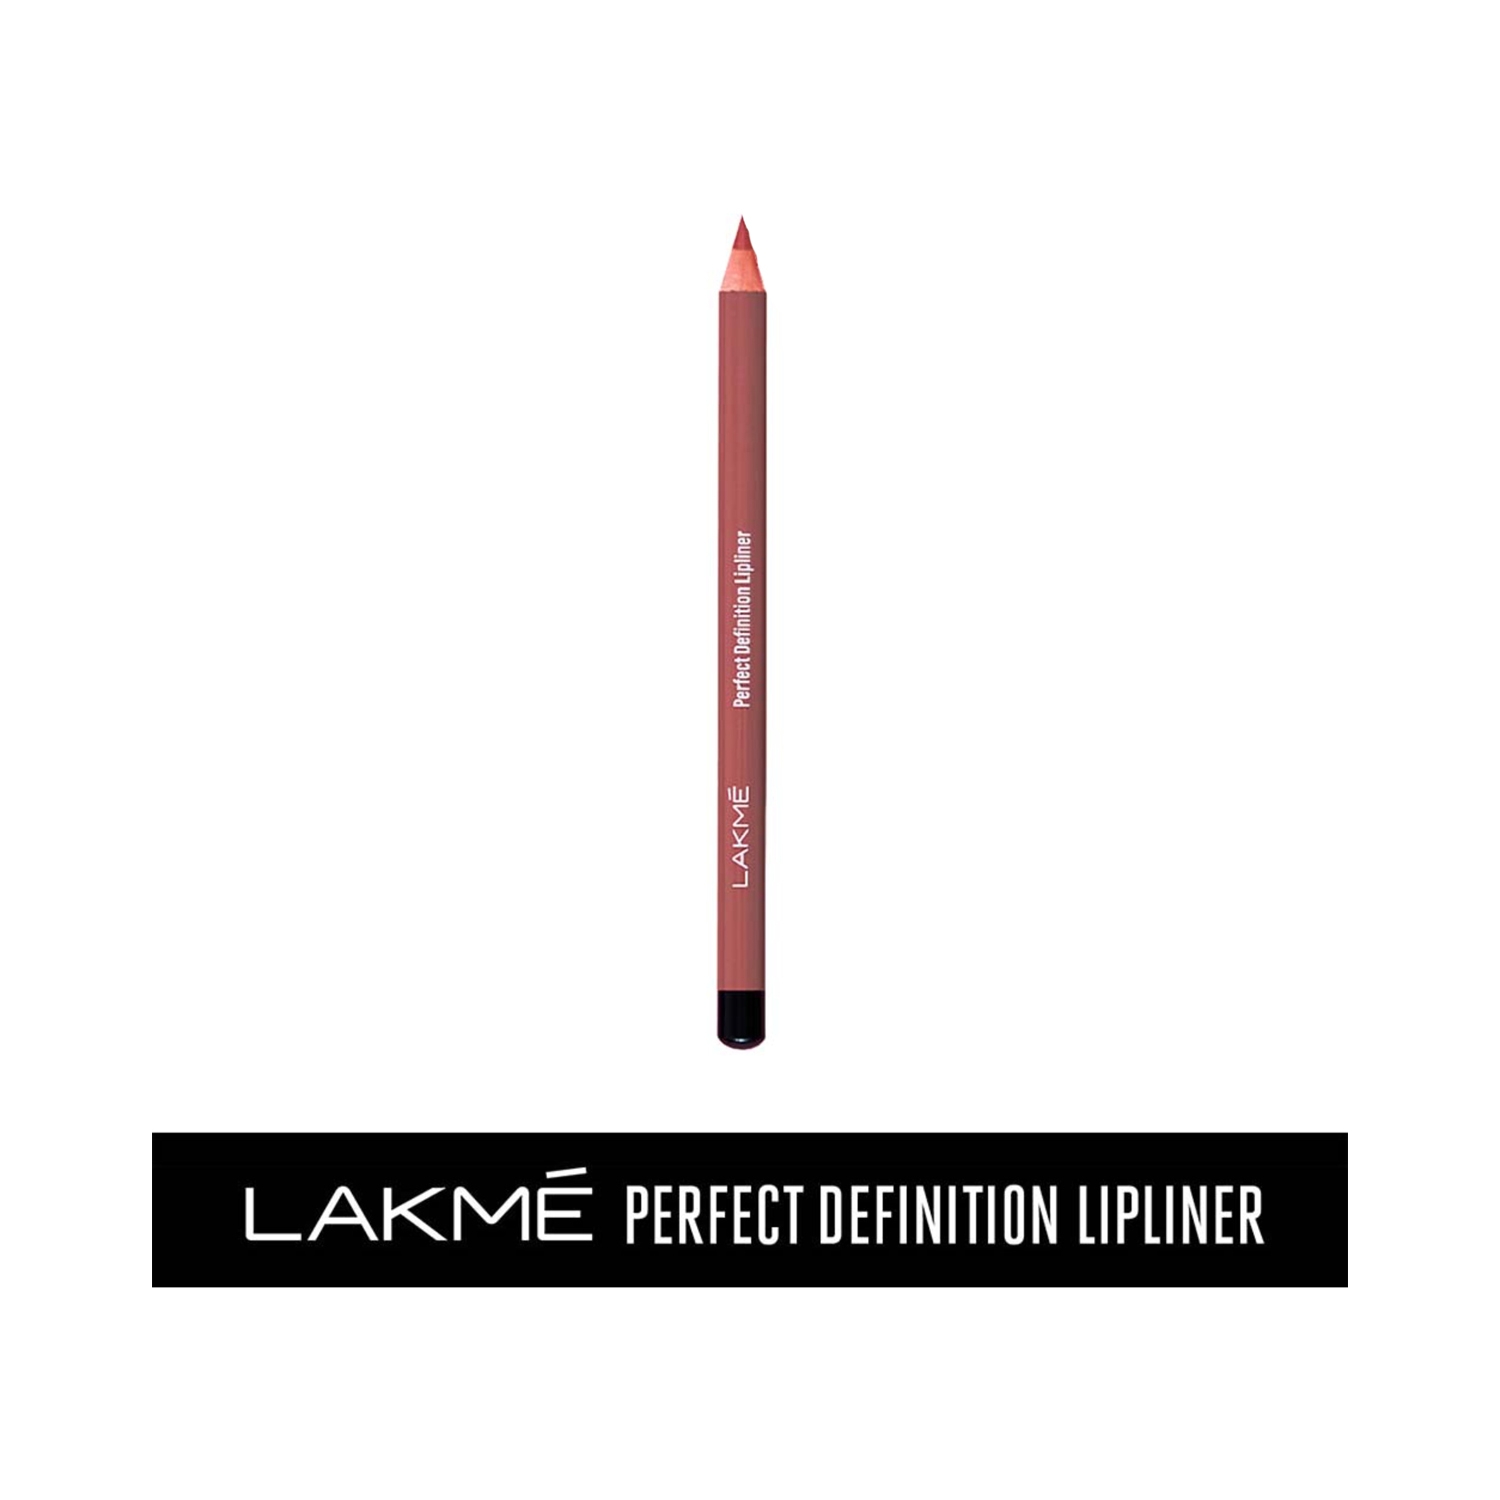 Lakme | Lakme Perfect Definition Lip Liner - Nude Sparkle (0.78g)